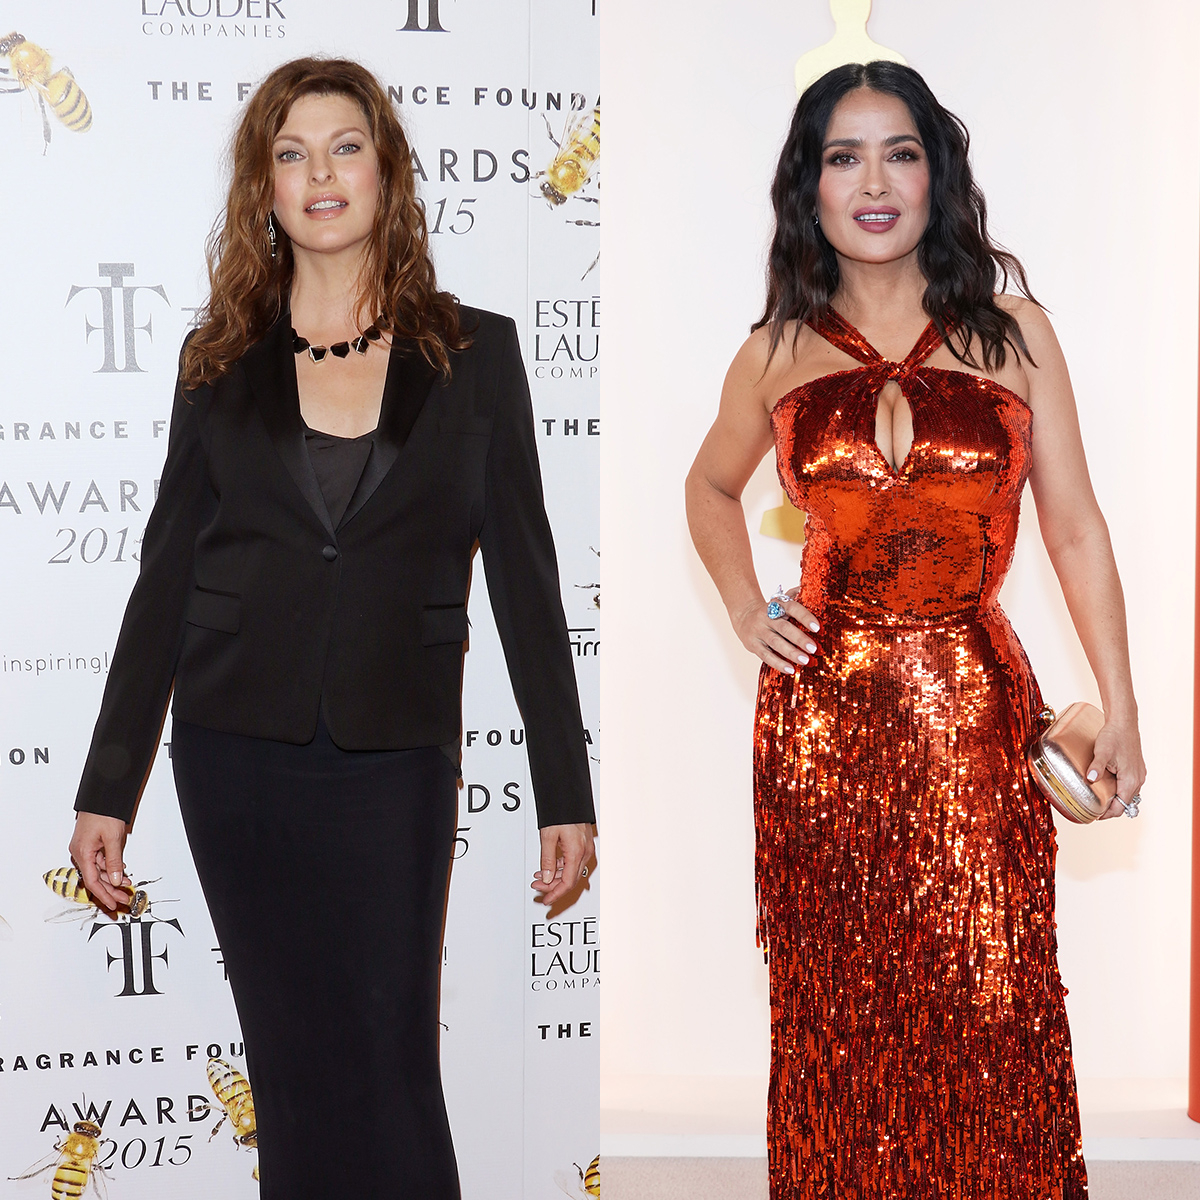 Salma Hayek Pinault, Annie Murphy, Kate Mara and more to star in